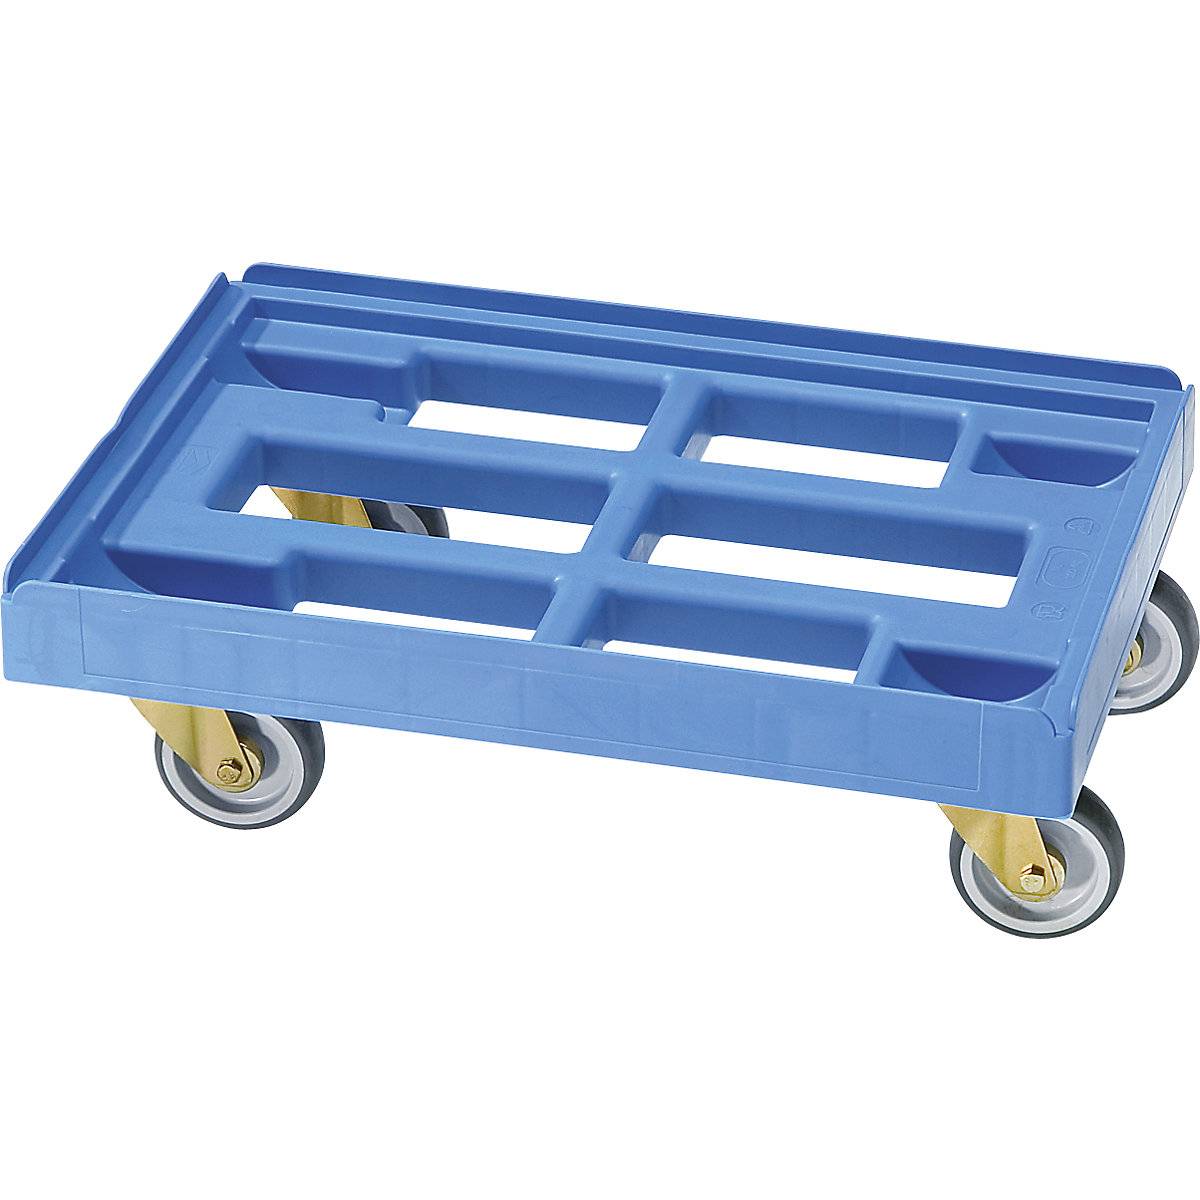 Transportroller, l x b = 610 x 410 mm, van HDPE, lichtblauw, vanaf 5 stuks-7